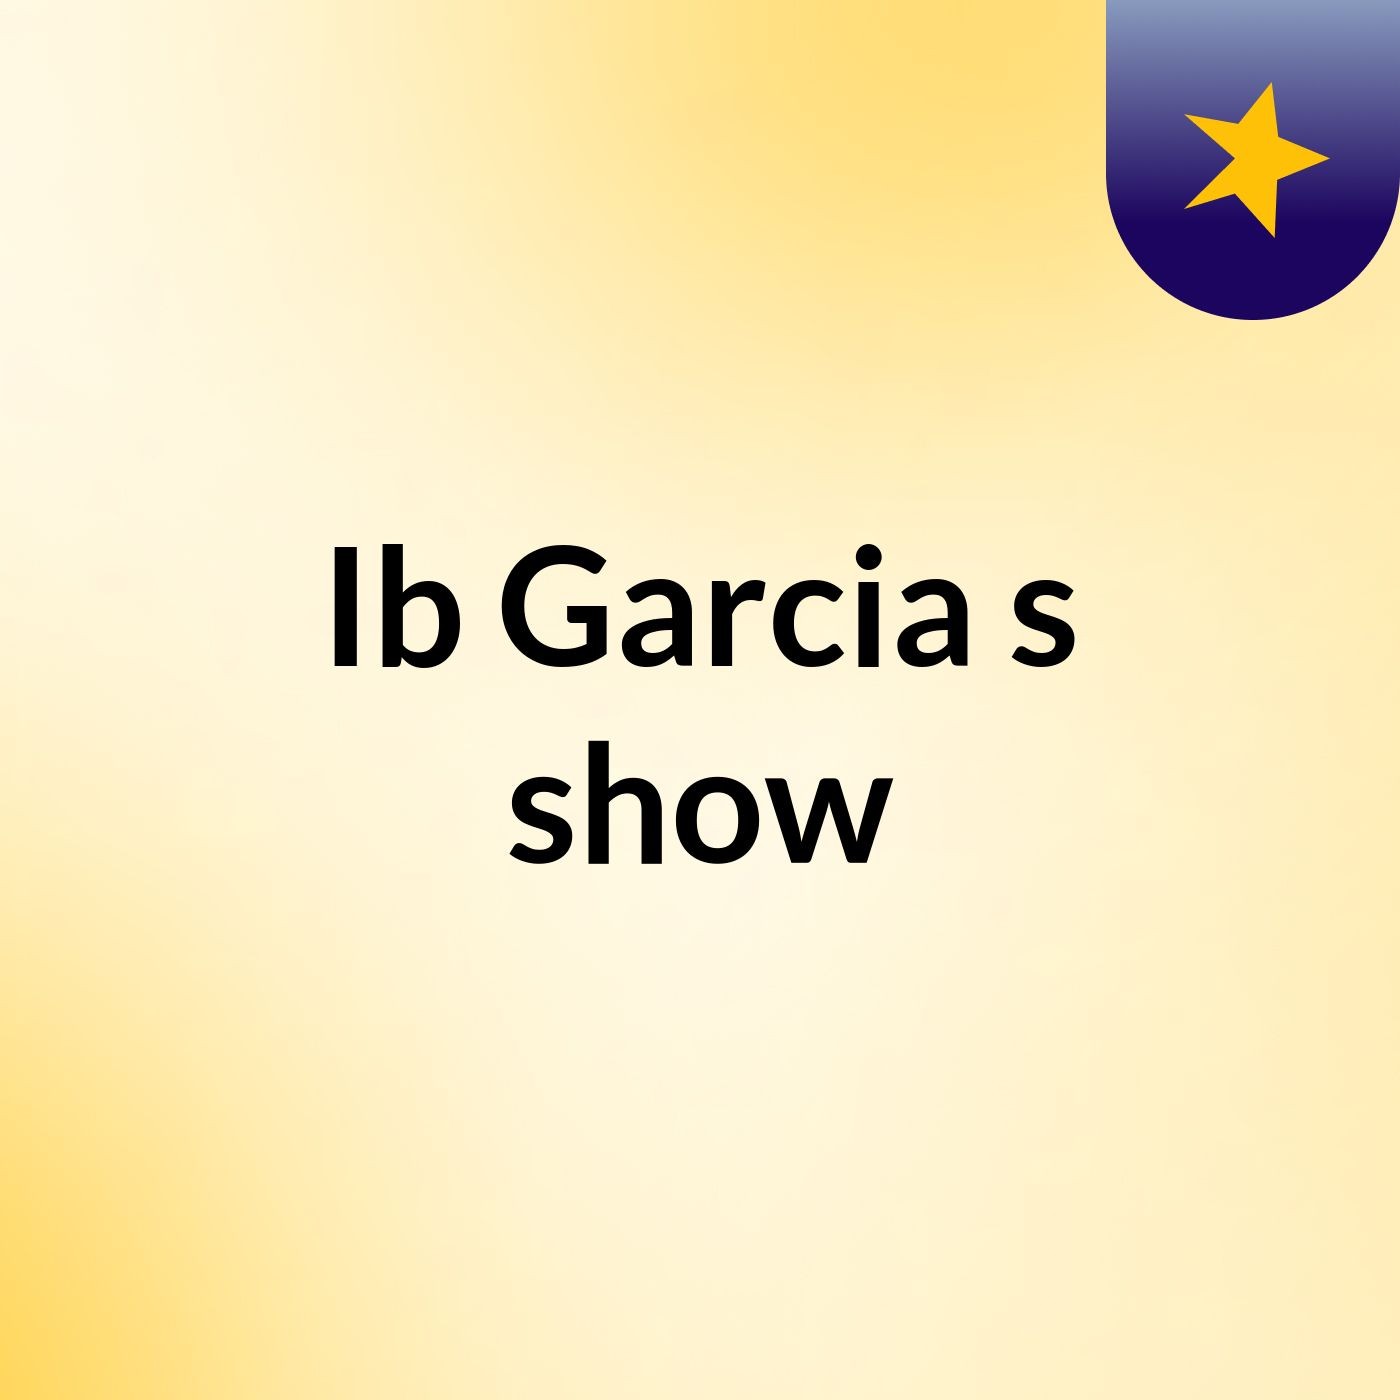 Ib Garcia's show